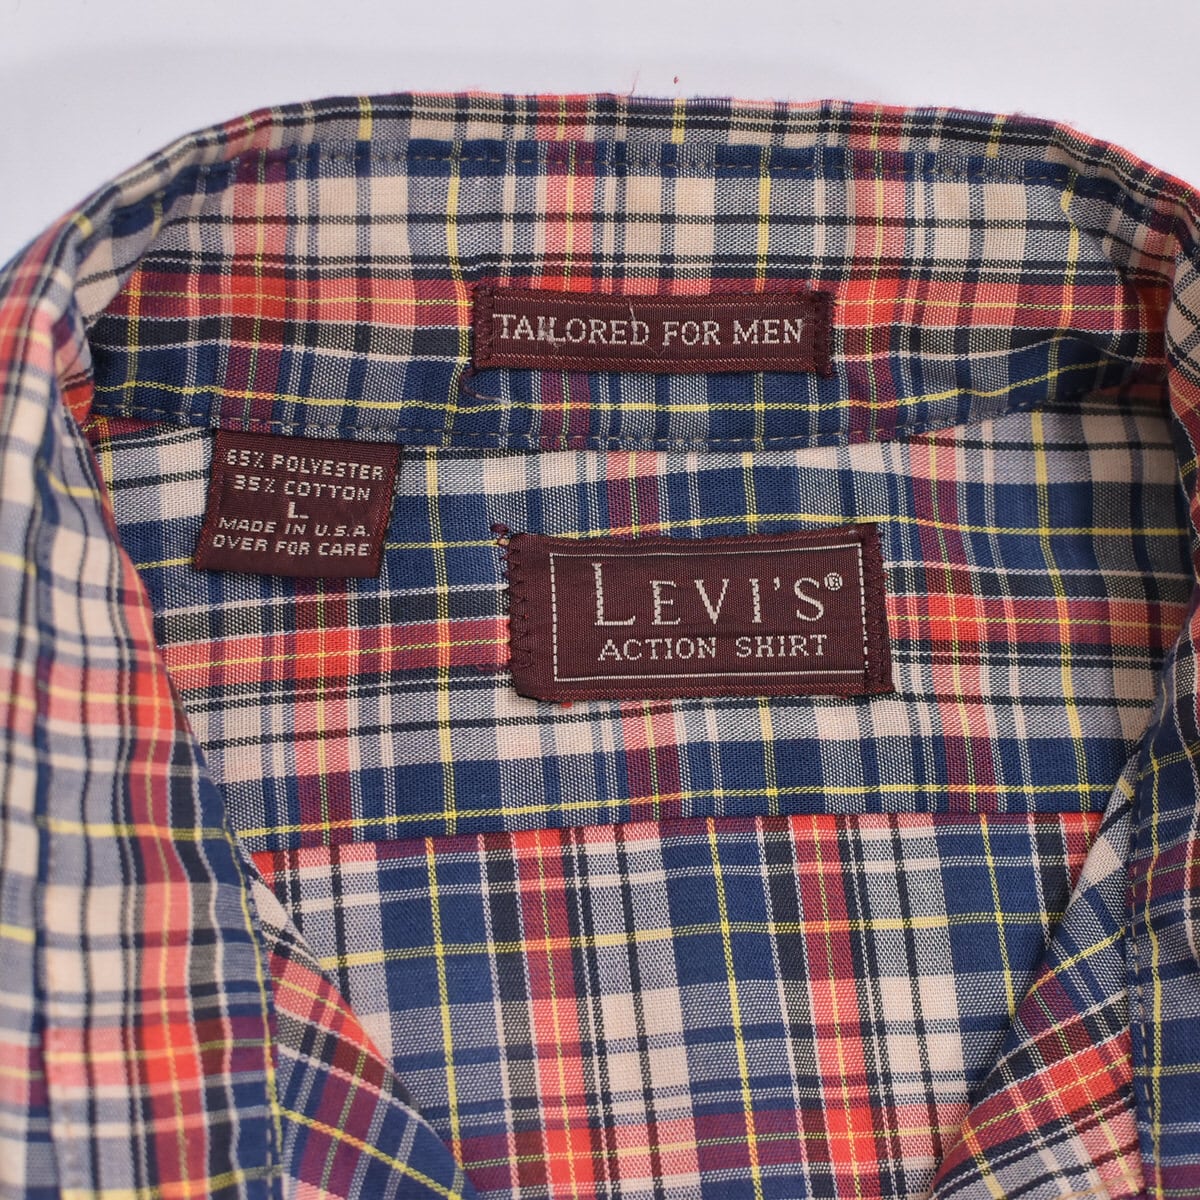 80s アメリカ製 Levi's ACTION SHIRT リーバイス チェックシャツ 